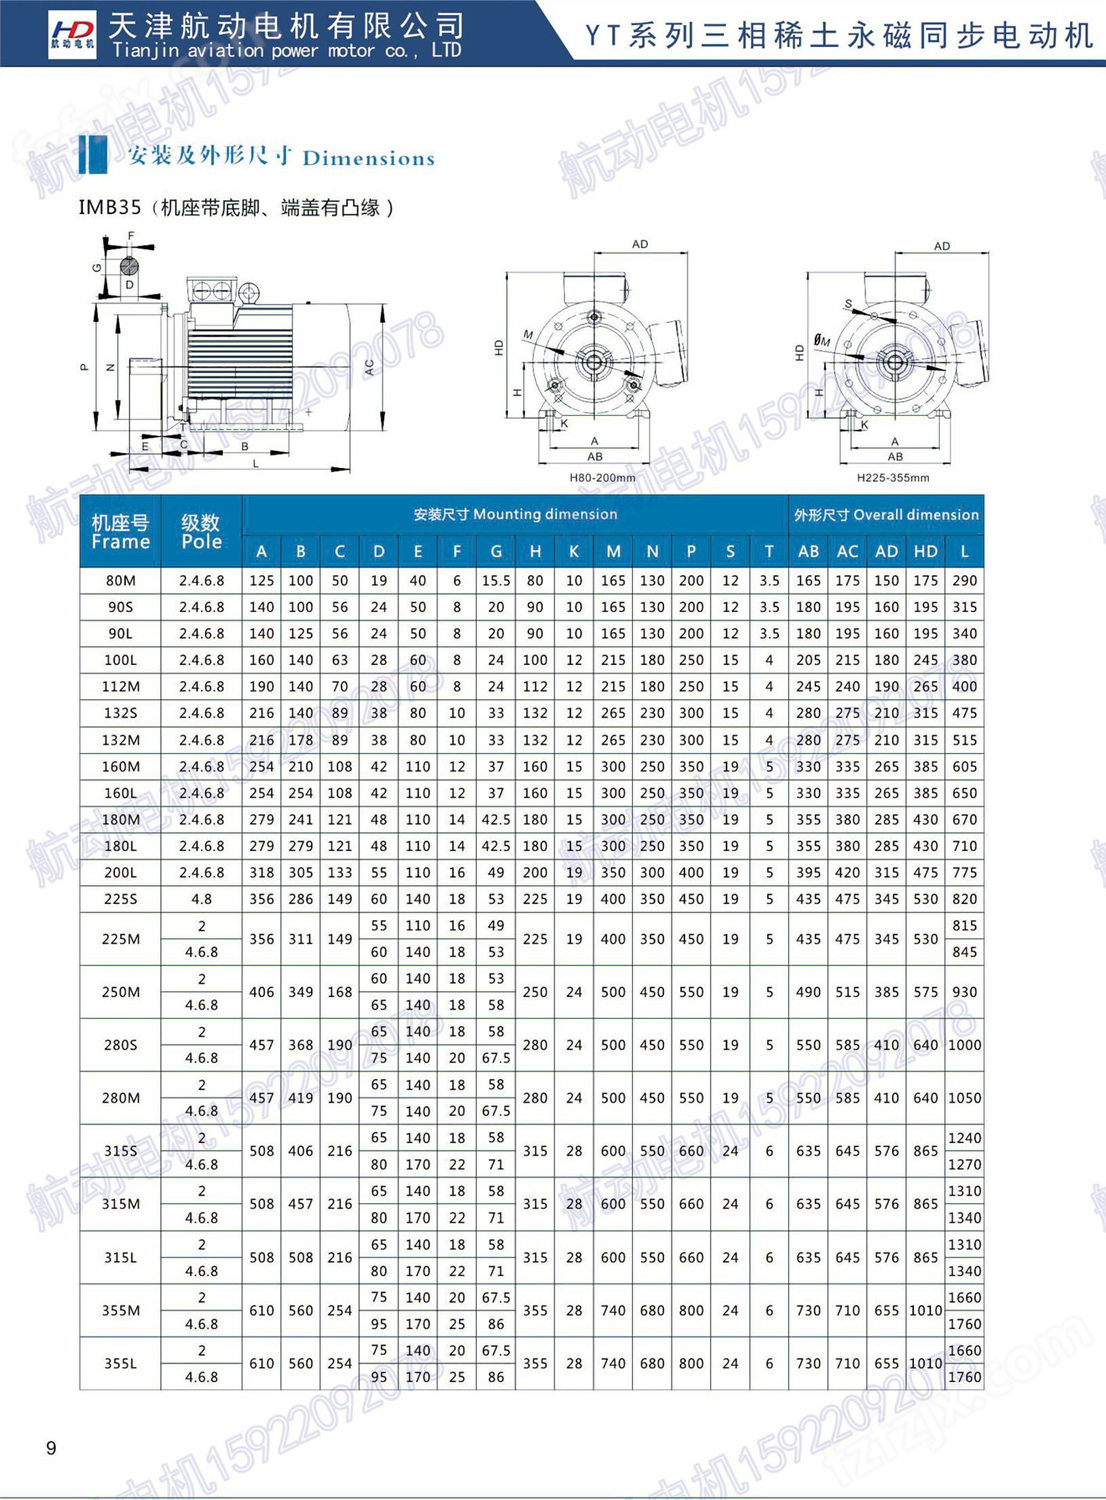  YT-280S-3000/75KW稀土永磁同步电机